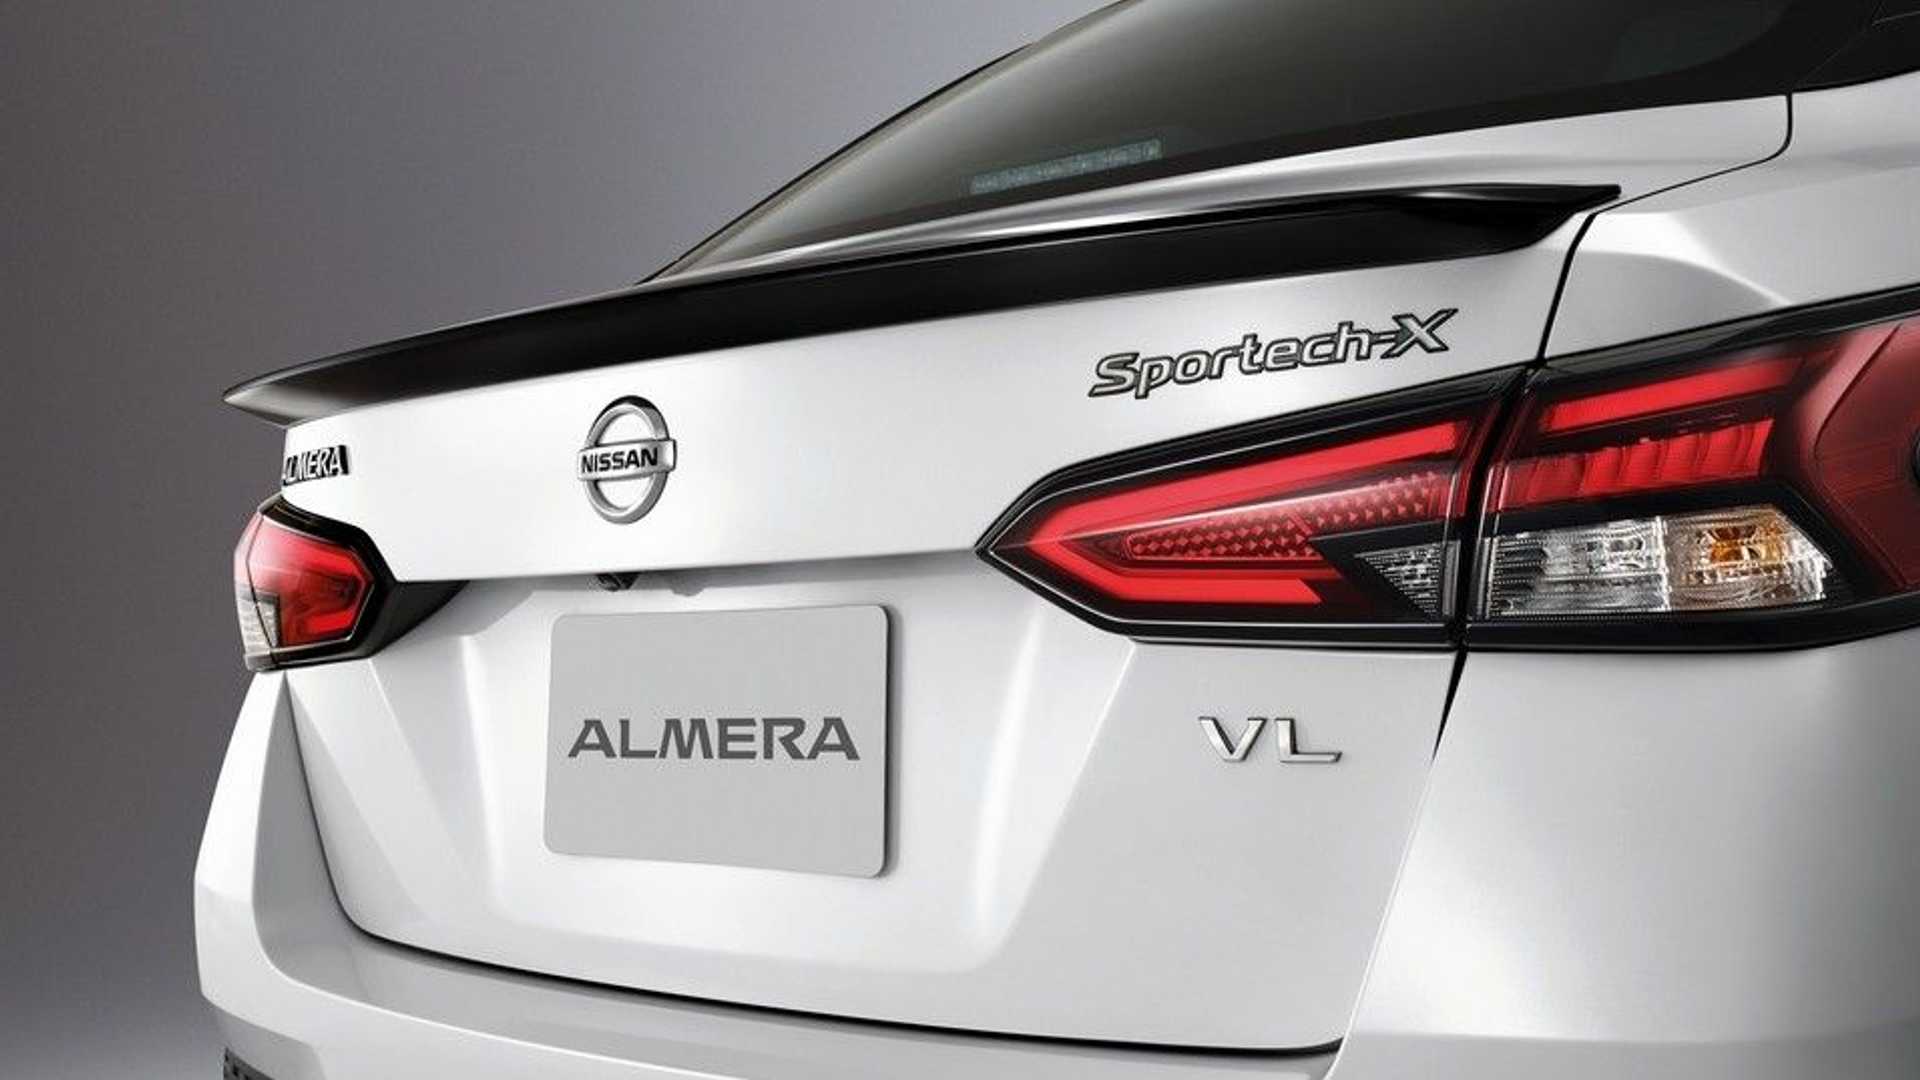 Nissan Versa Almera Sportech X